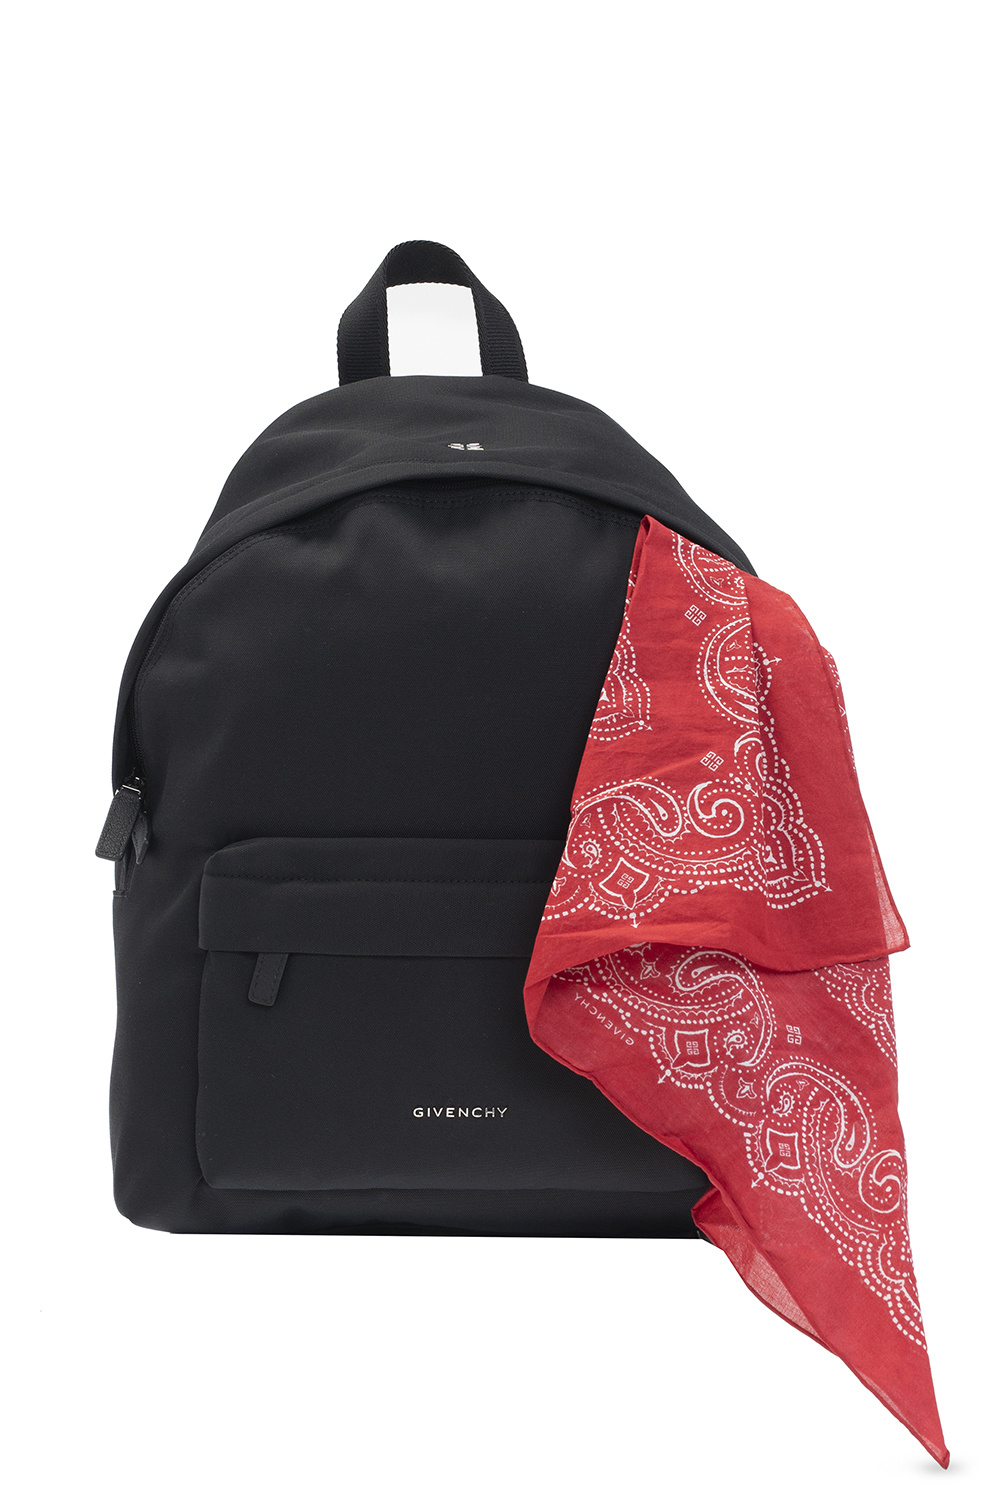 Givenchy Backpack with bandana | Men's Bags | Vitkac